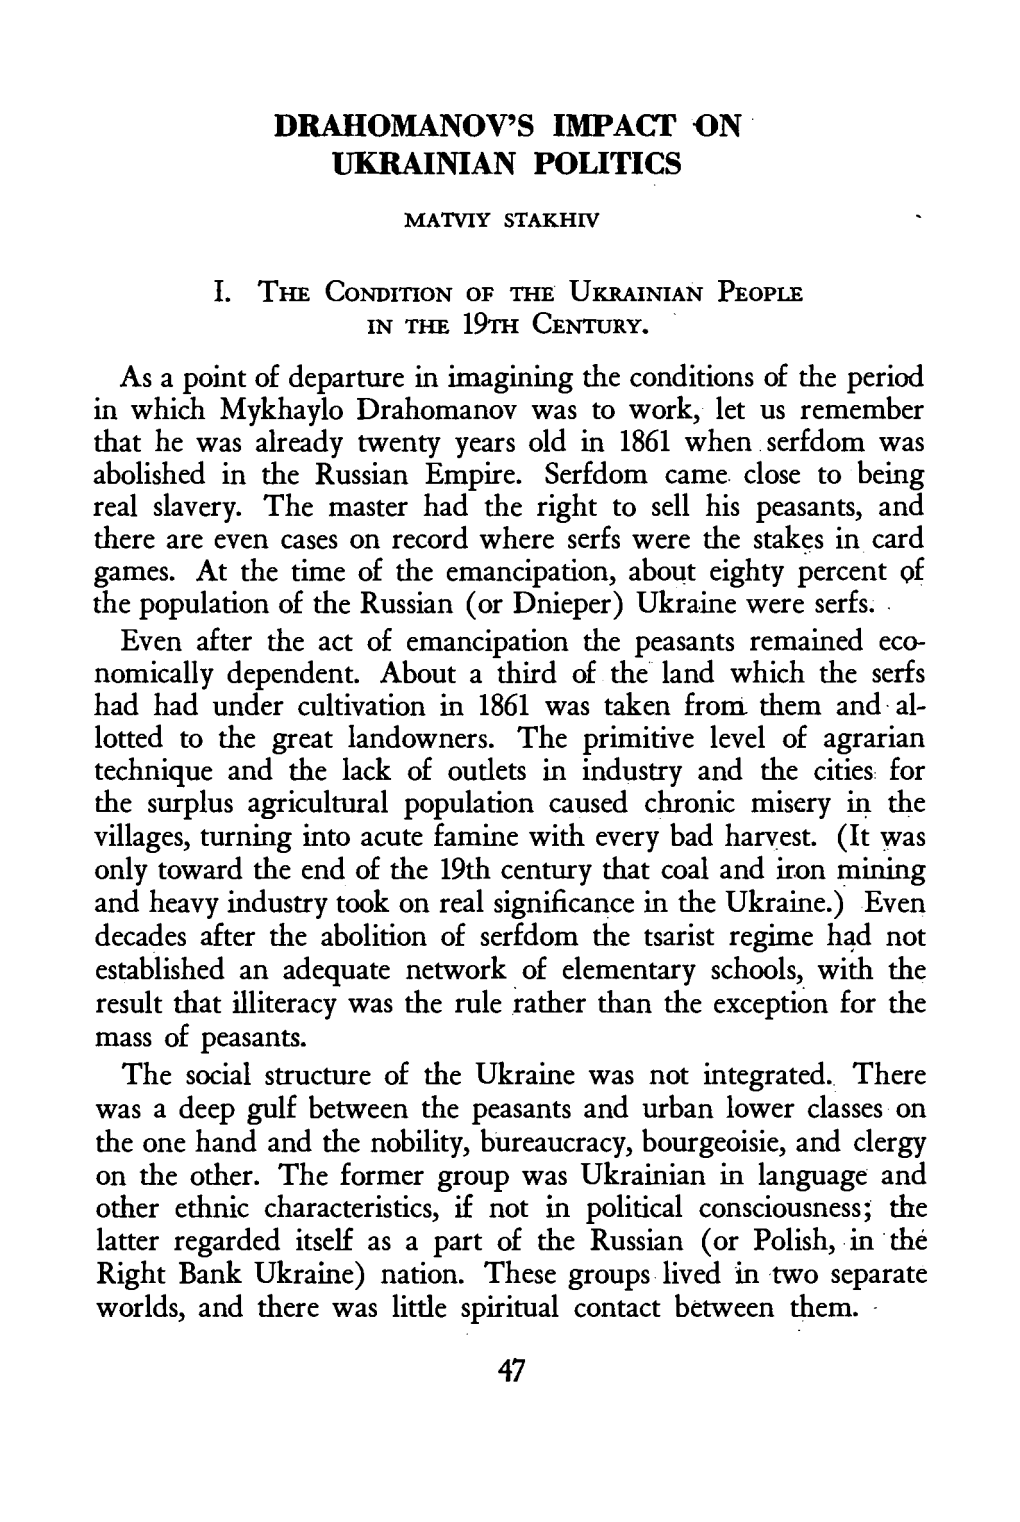 The Annals of UVAN, Vol. II, Spring, 1952, No. 1